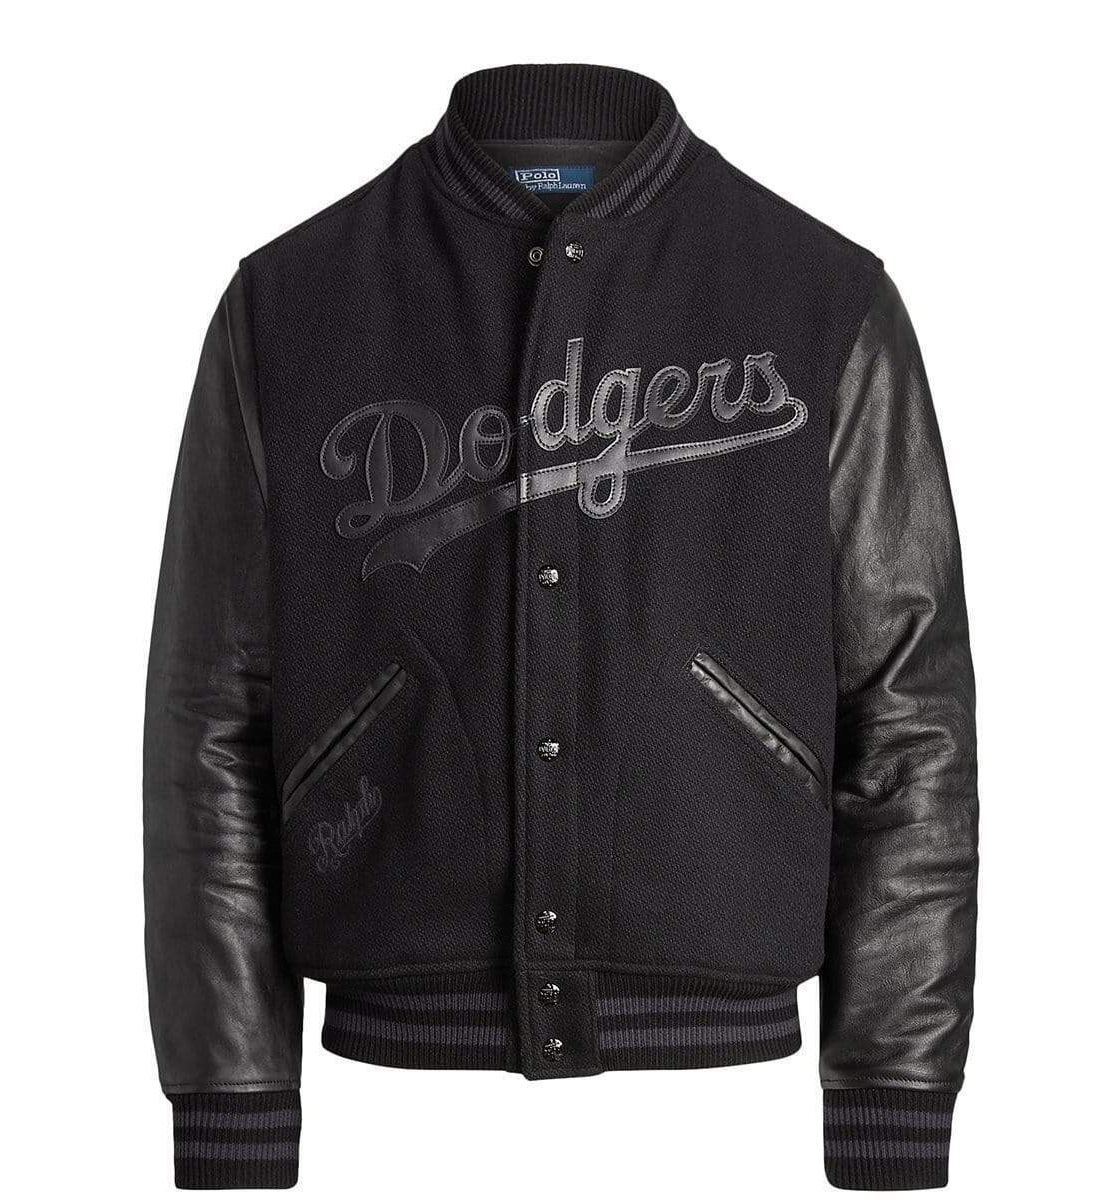 Polo Ralph Lauren LA Dodgers Baseball Bomber Jacket